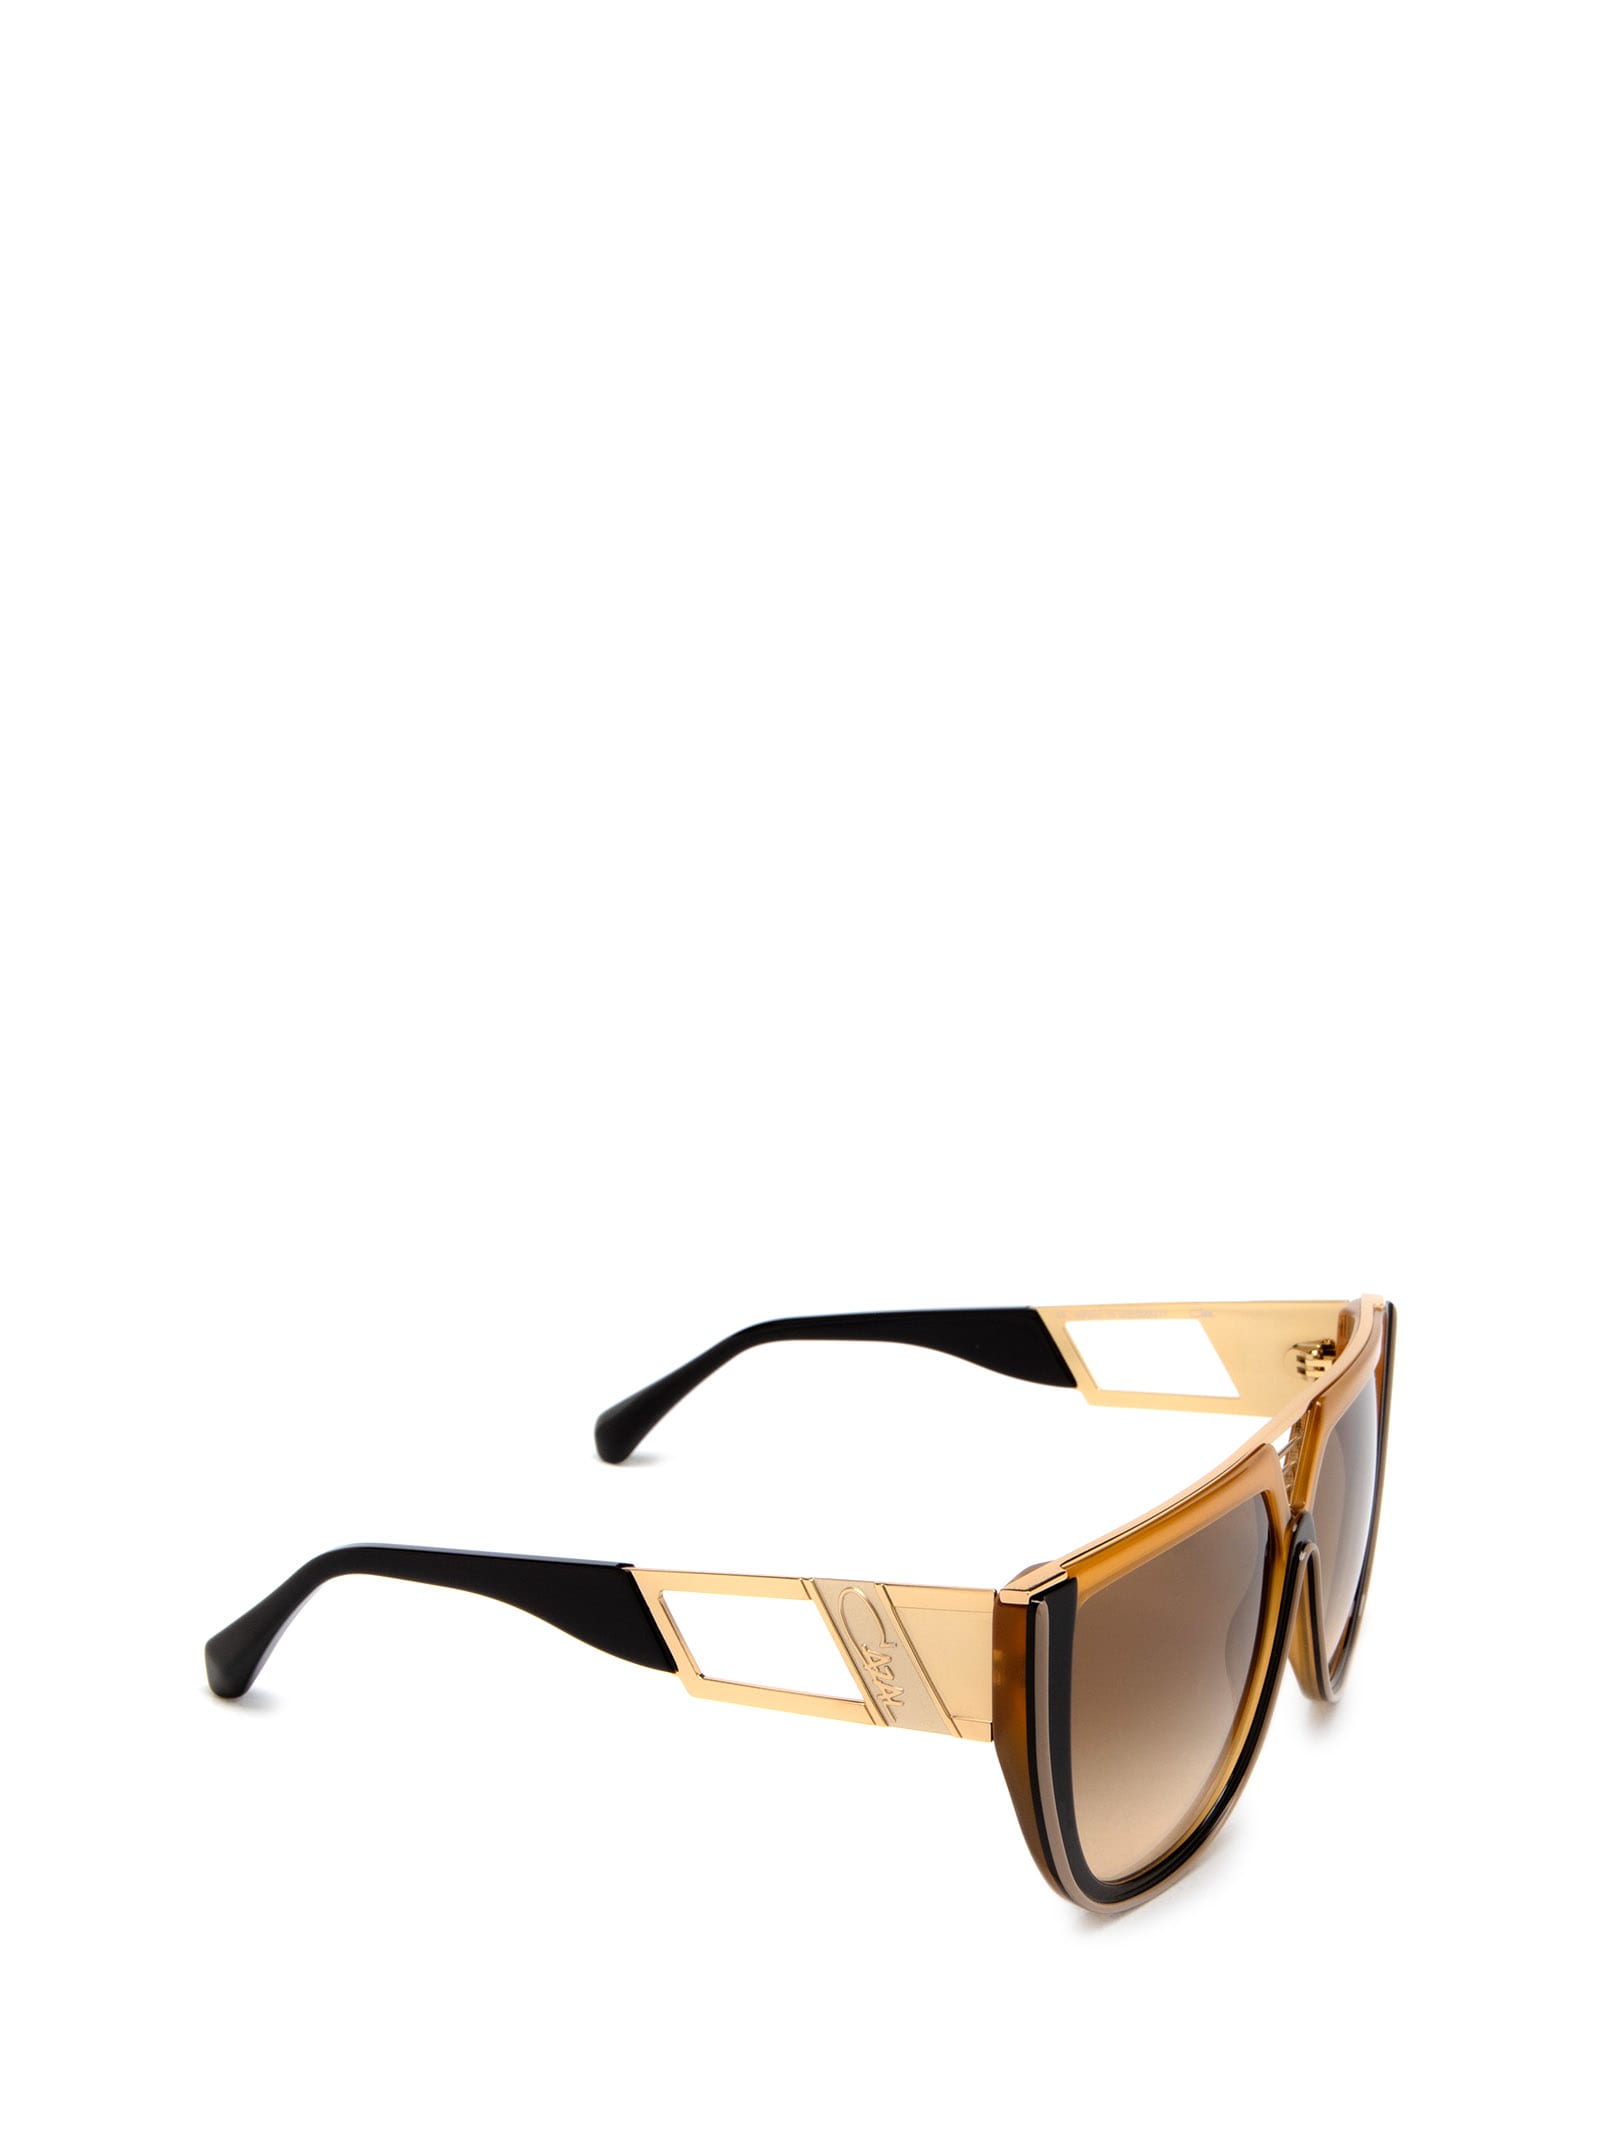 Shop Cazal 8511 Amber - Chocolate Sunglasses